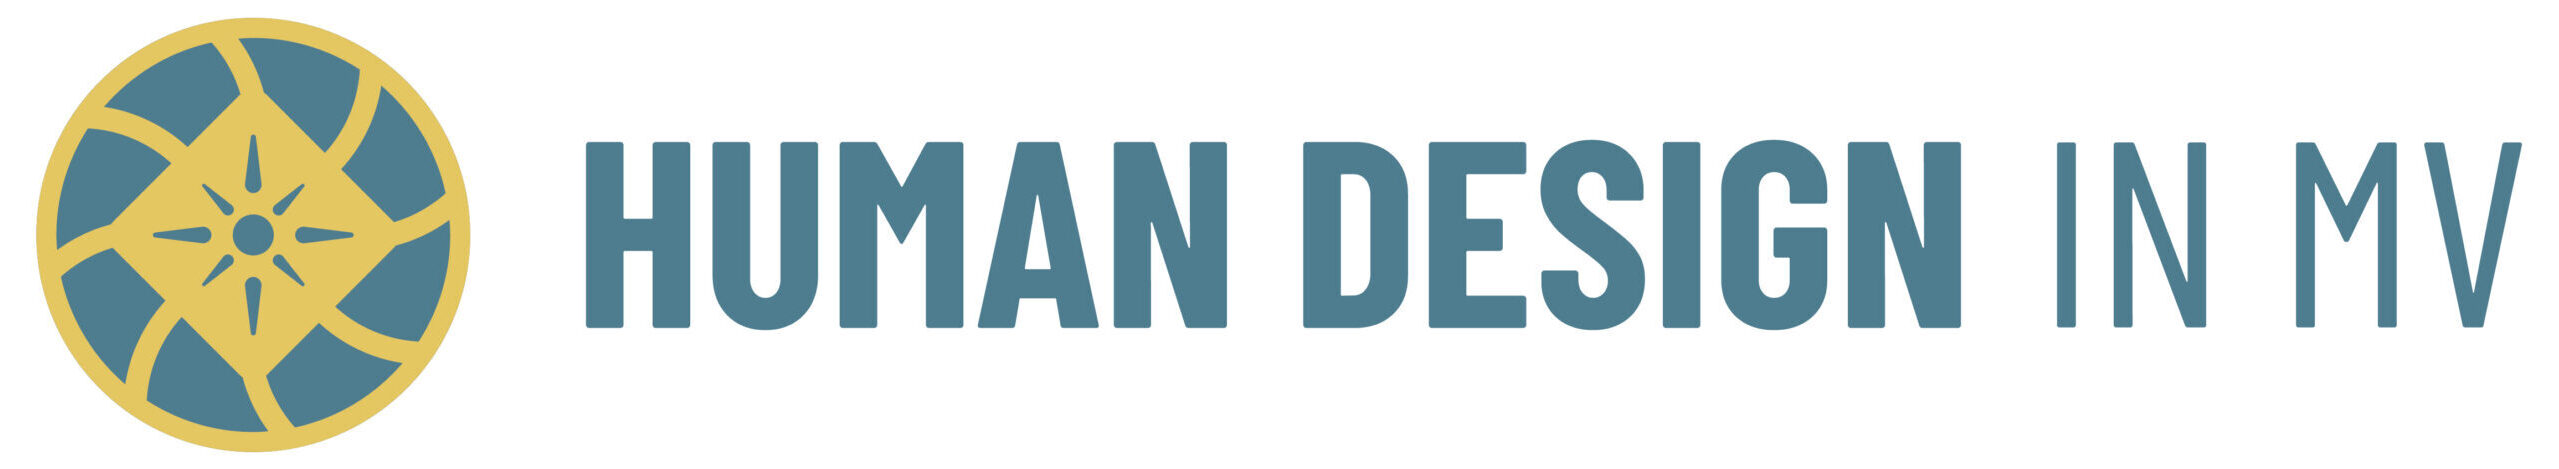 Logo 2 Human Design in MV